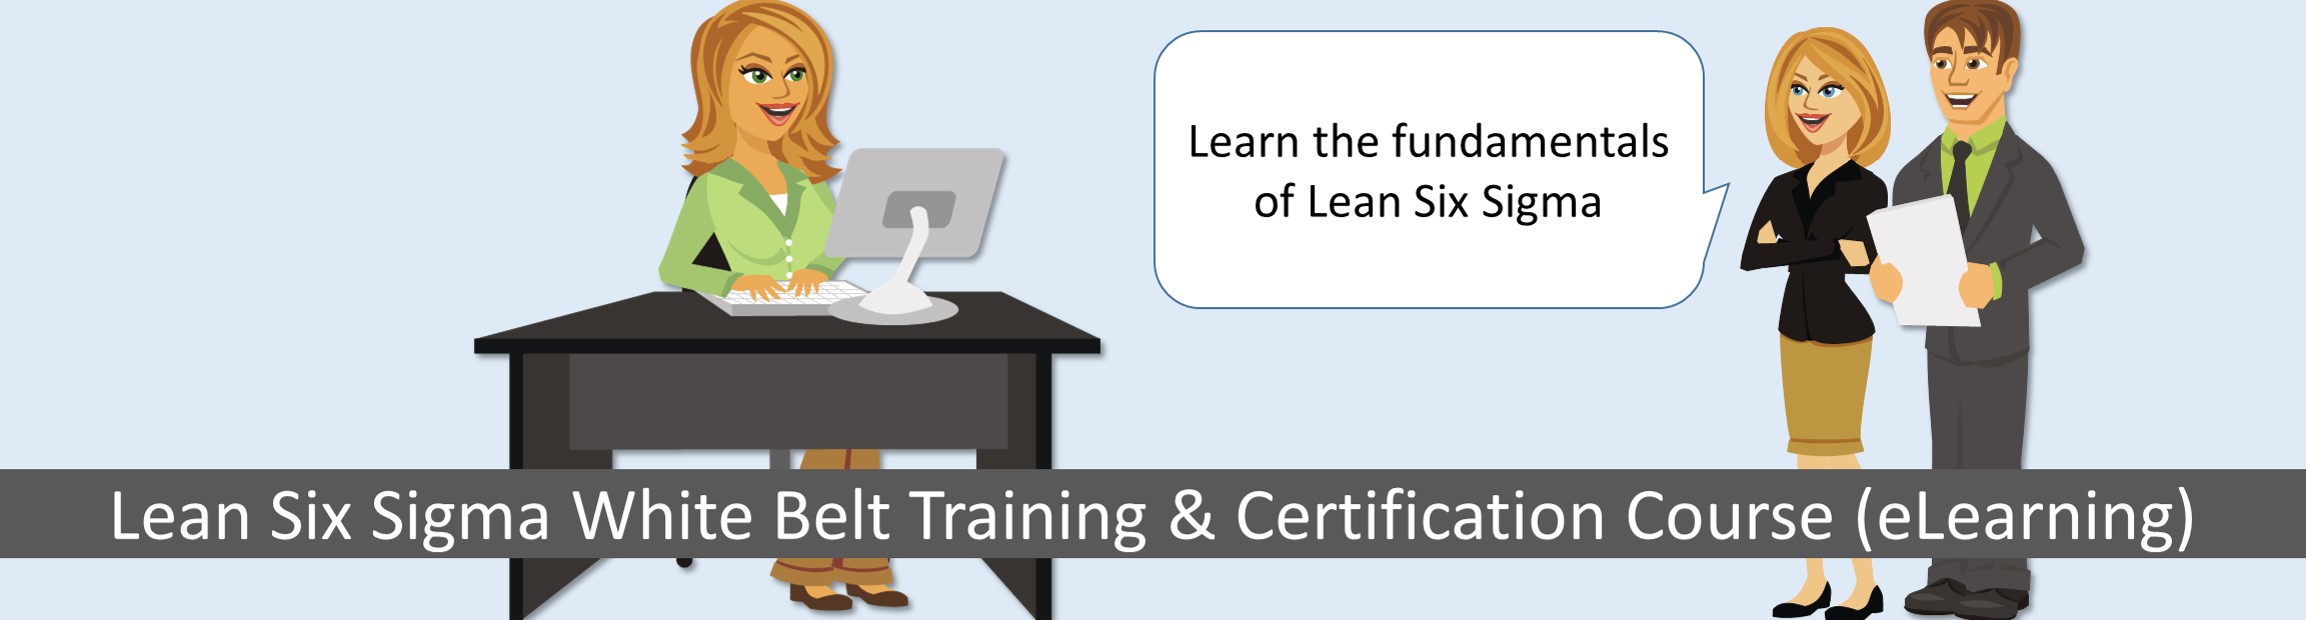 Lean Six Sigma White Belt Training & Certification Course